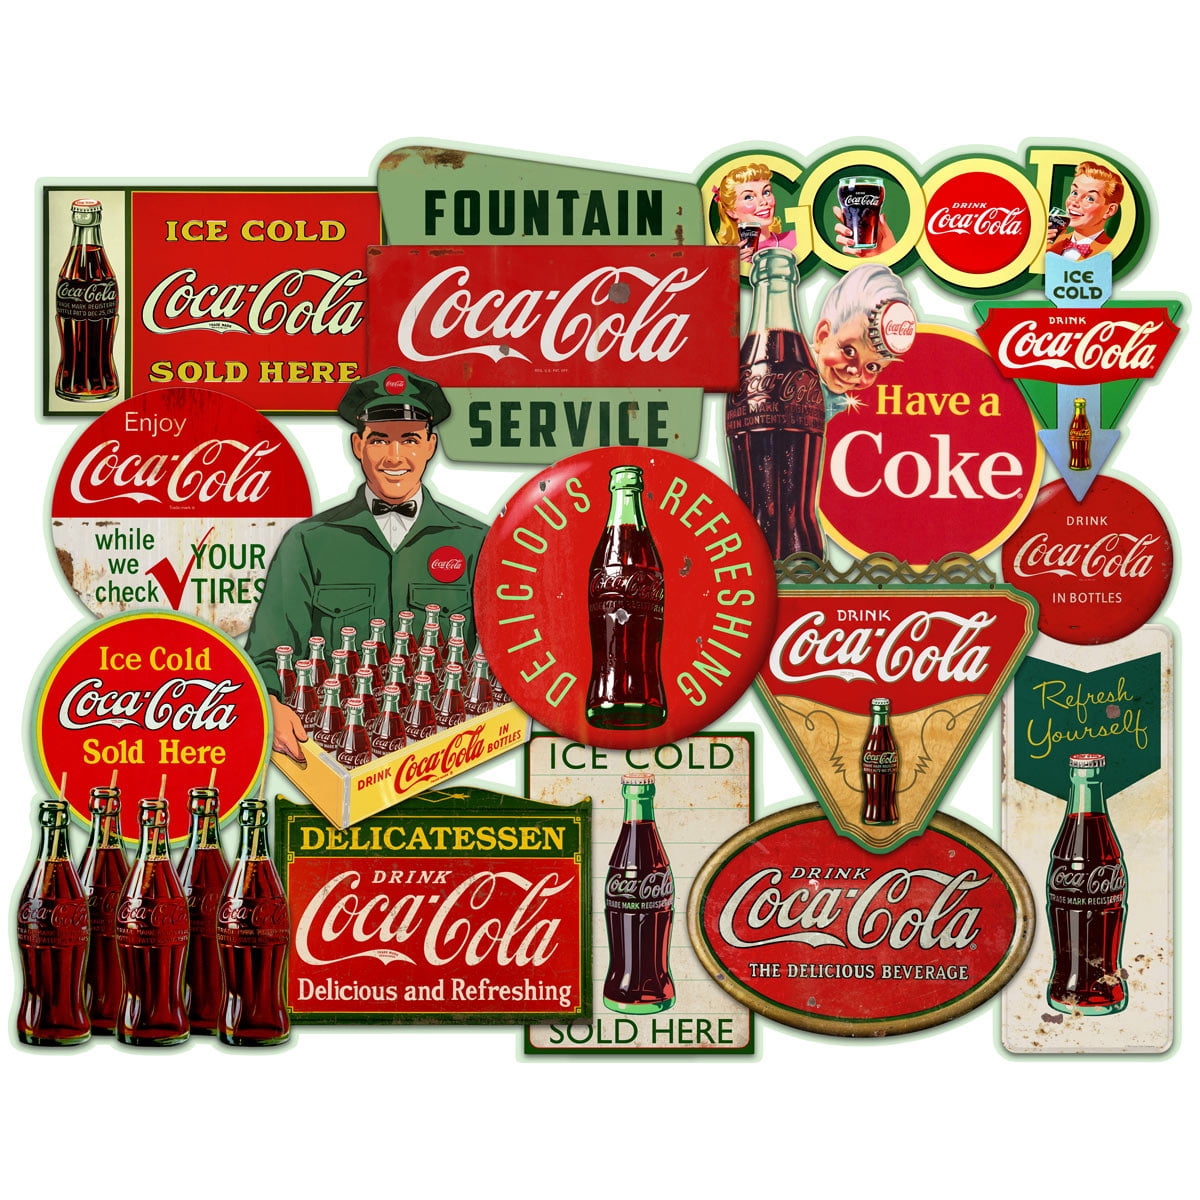 BRAND NEW Coca-Cola Tea Towel Vintage Advertising Slogan Soda Fountain Ice Cold 